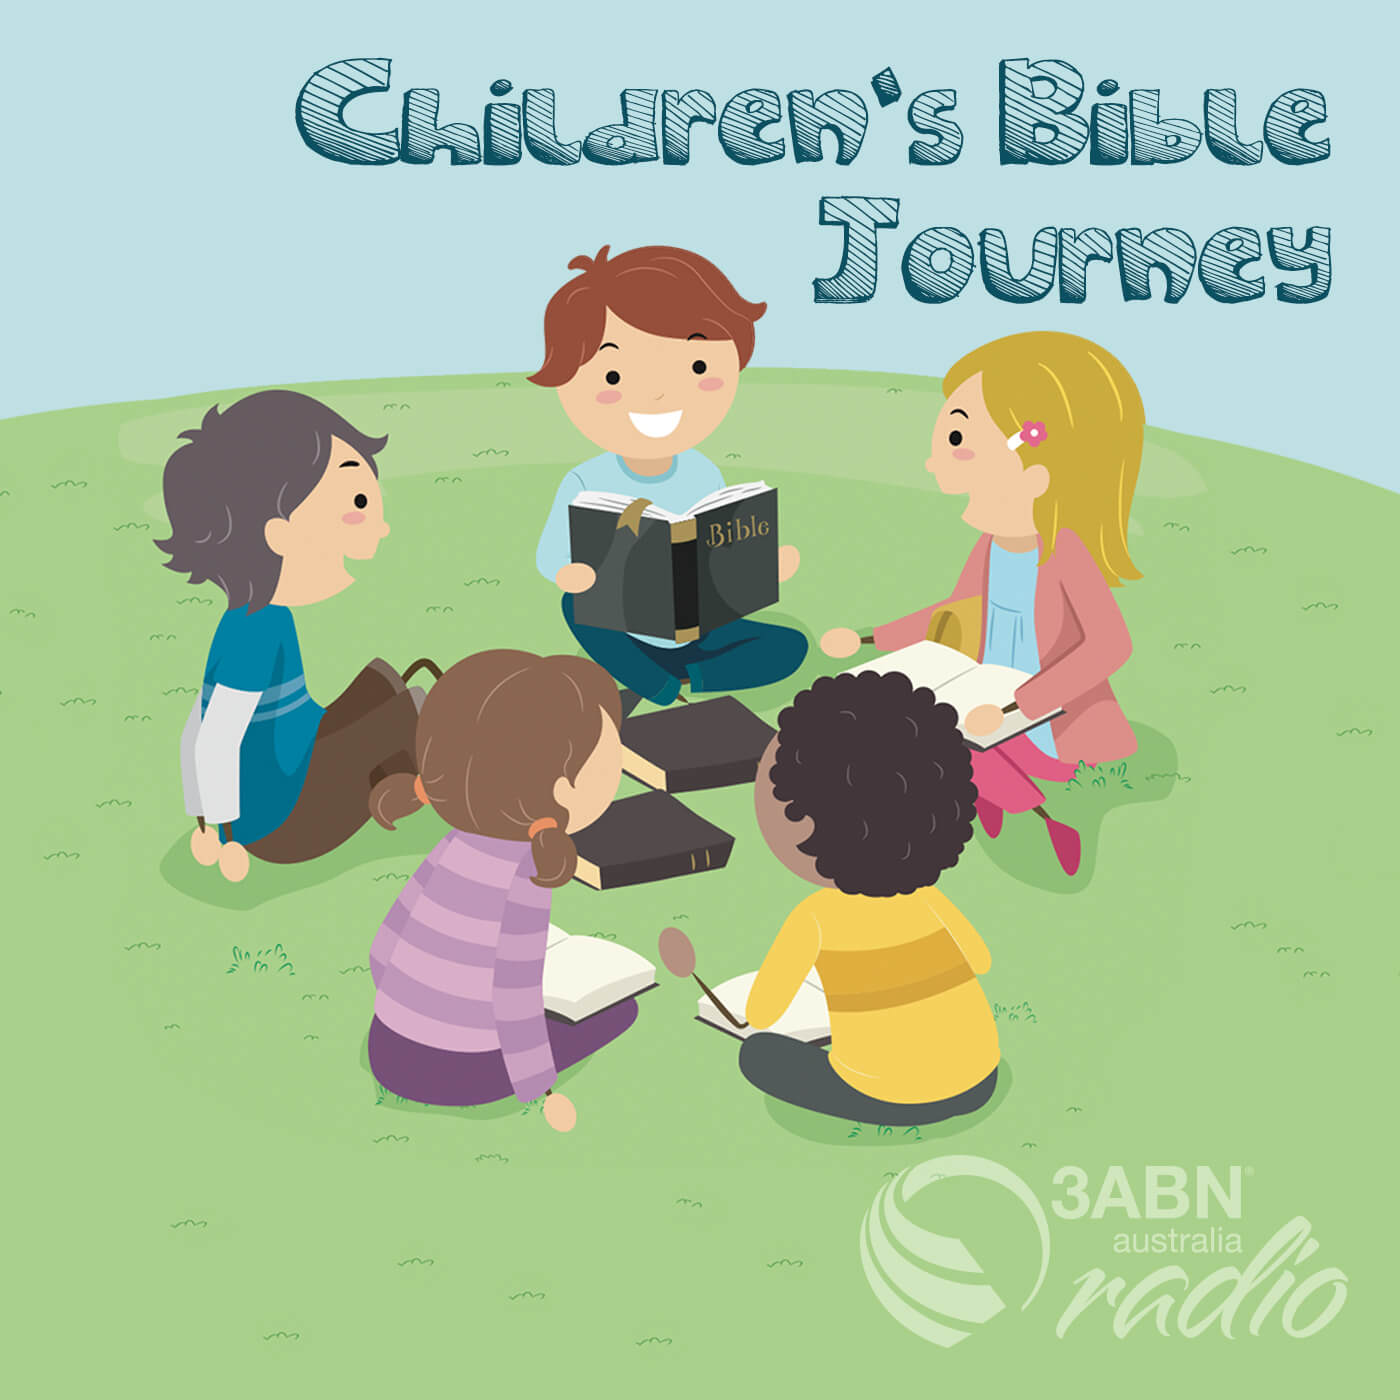 Children's Bible Journey - 2169